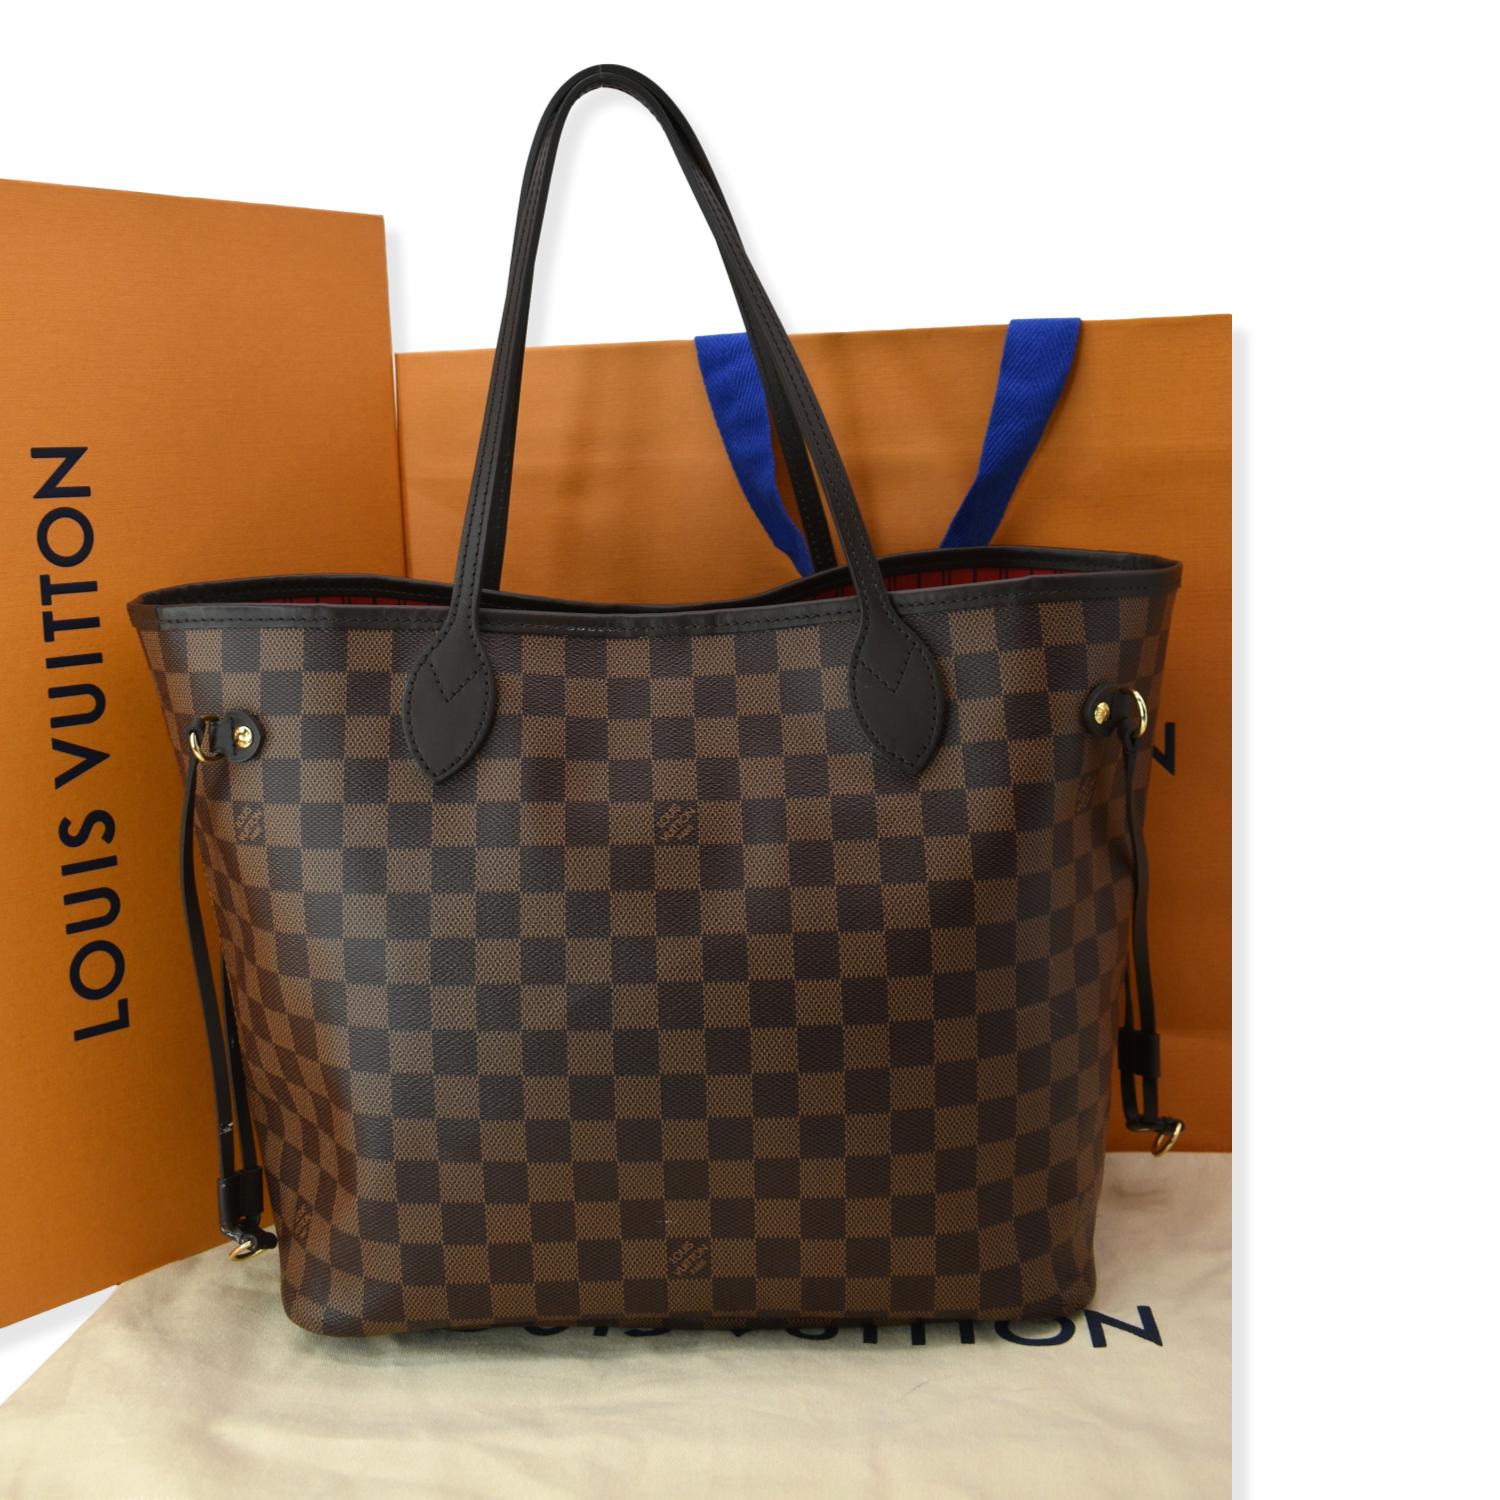 Brown Louis Vuitton Monogram Neverfull MM Tote Bag, RvceShops Revival